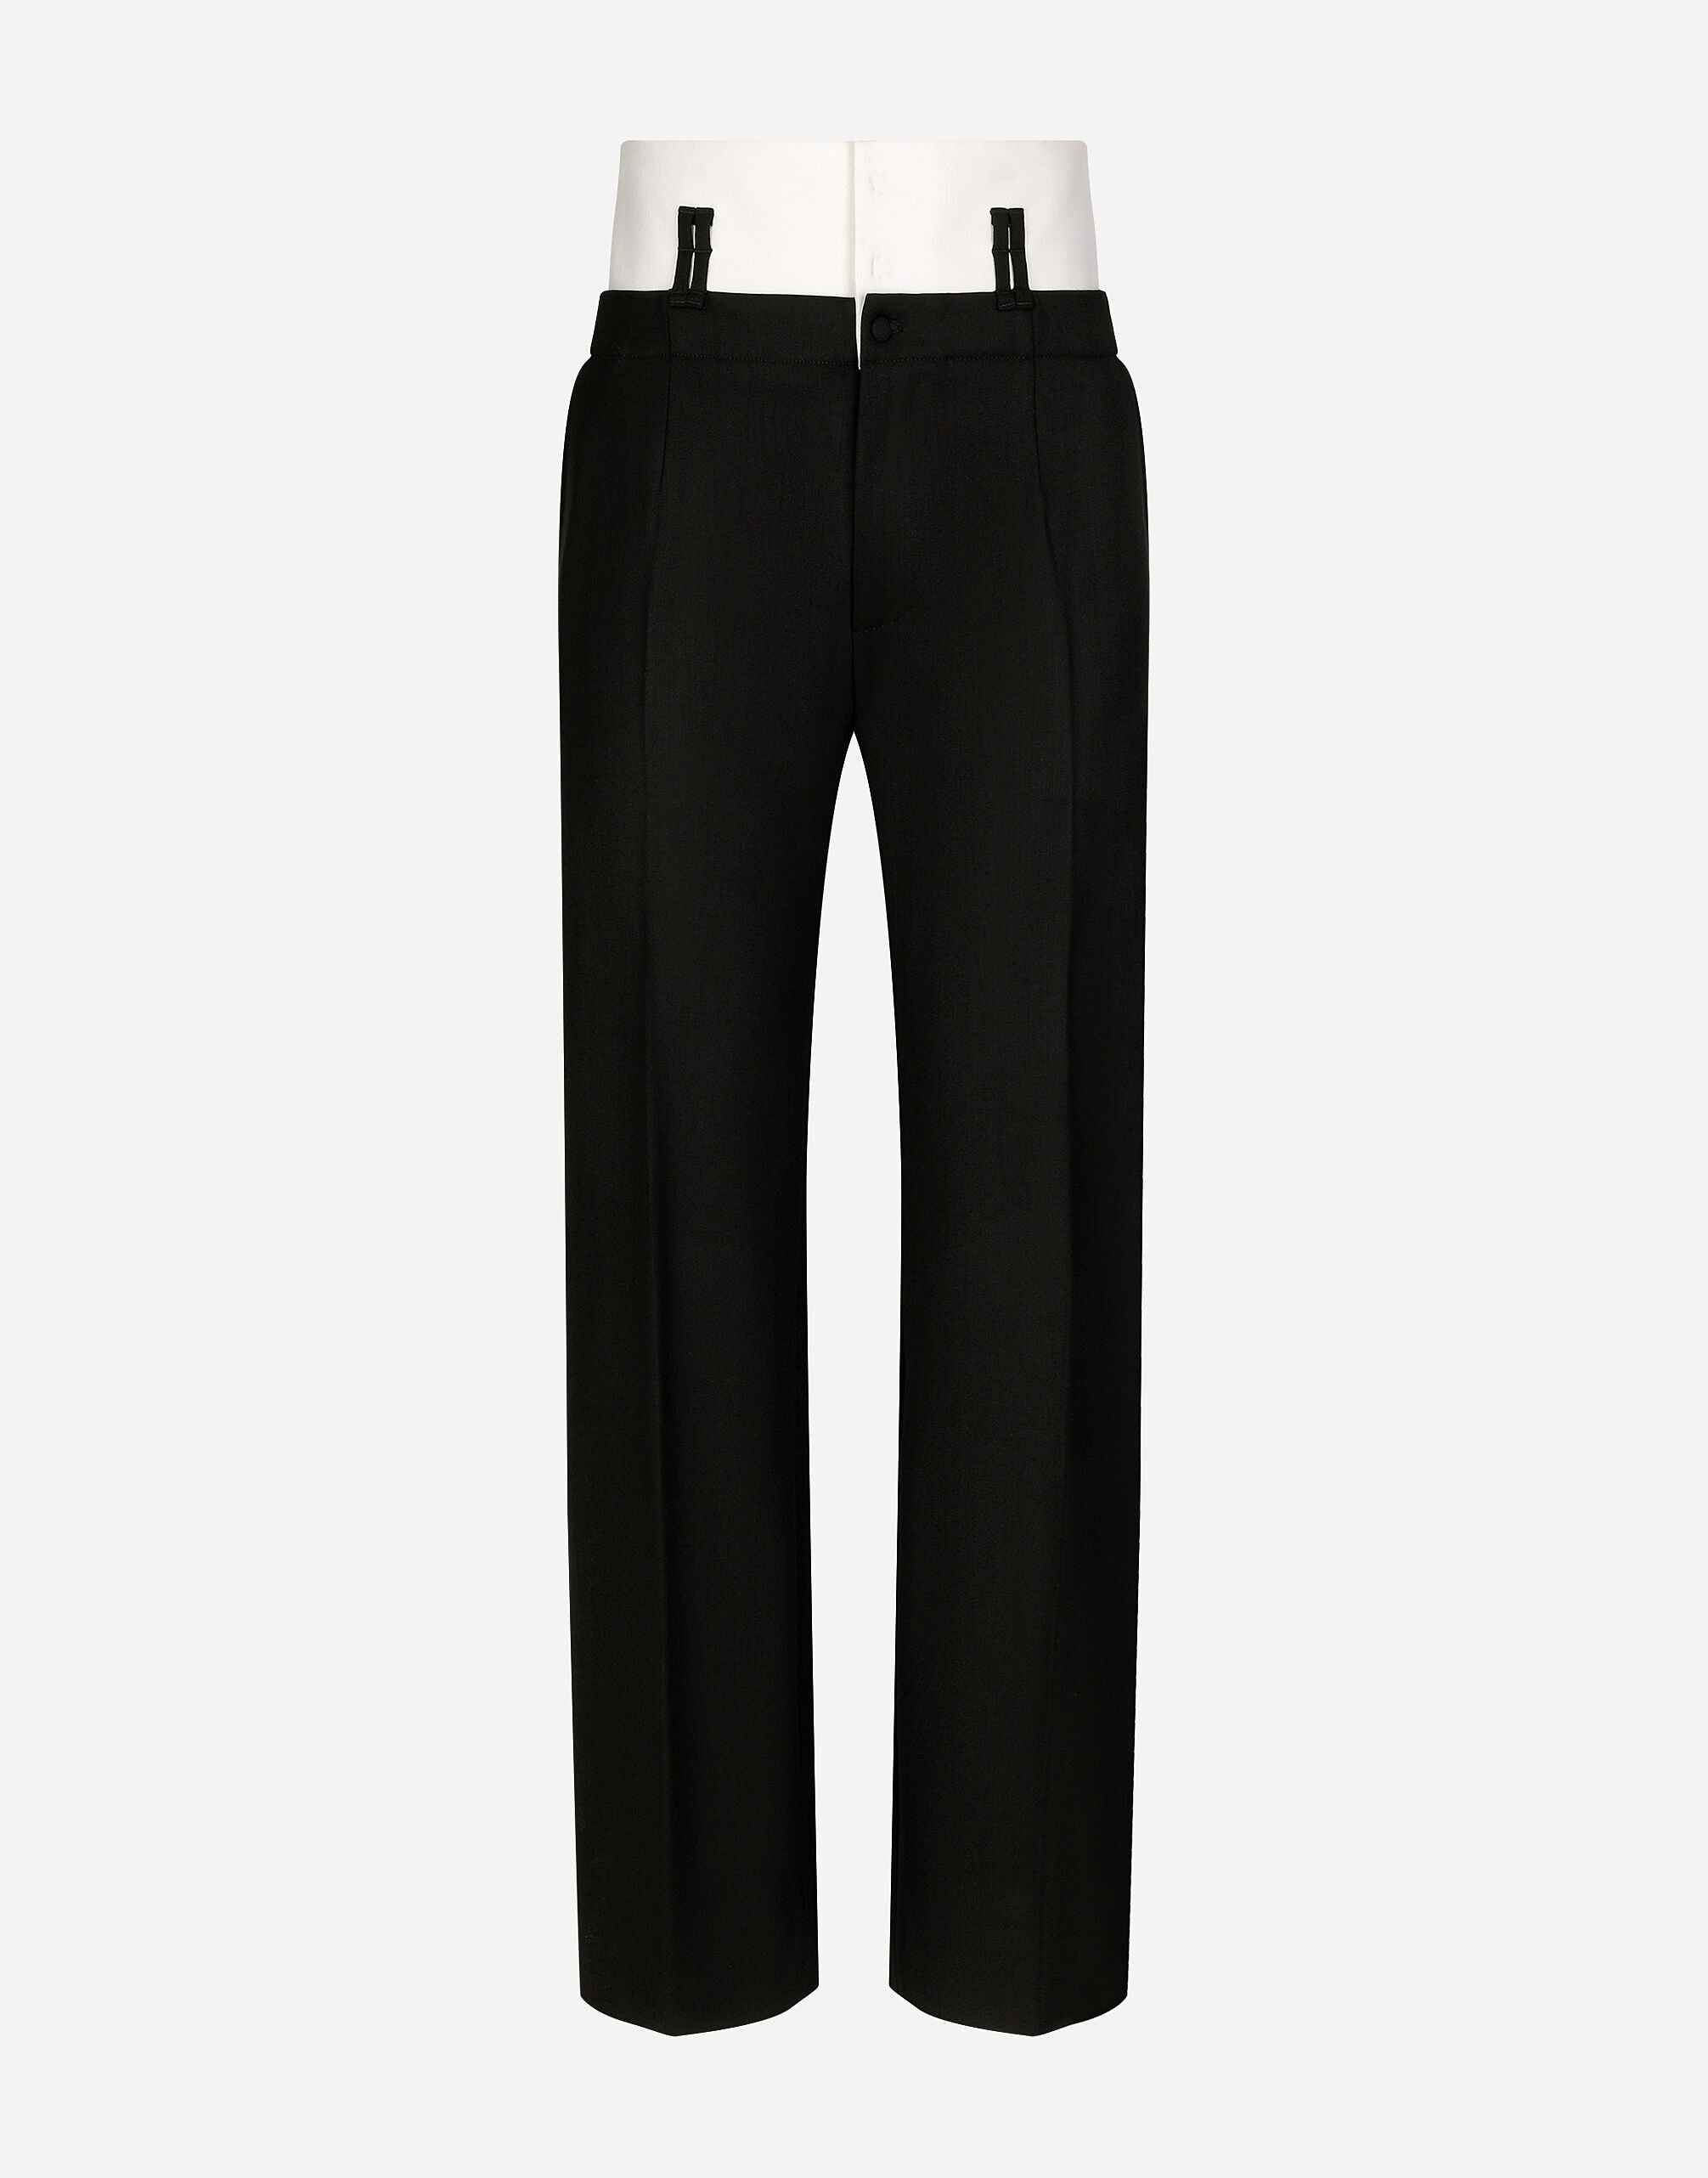 Dolce & Gabbana Tailored pants with contrasting belt Black G2TM9TFUBFY